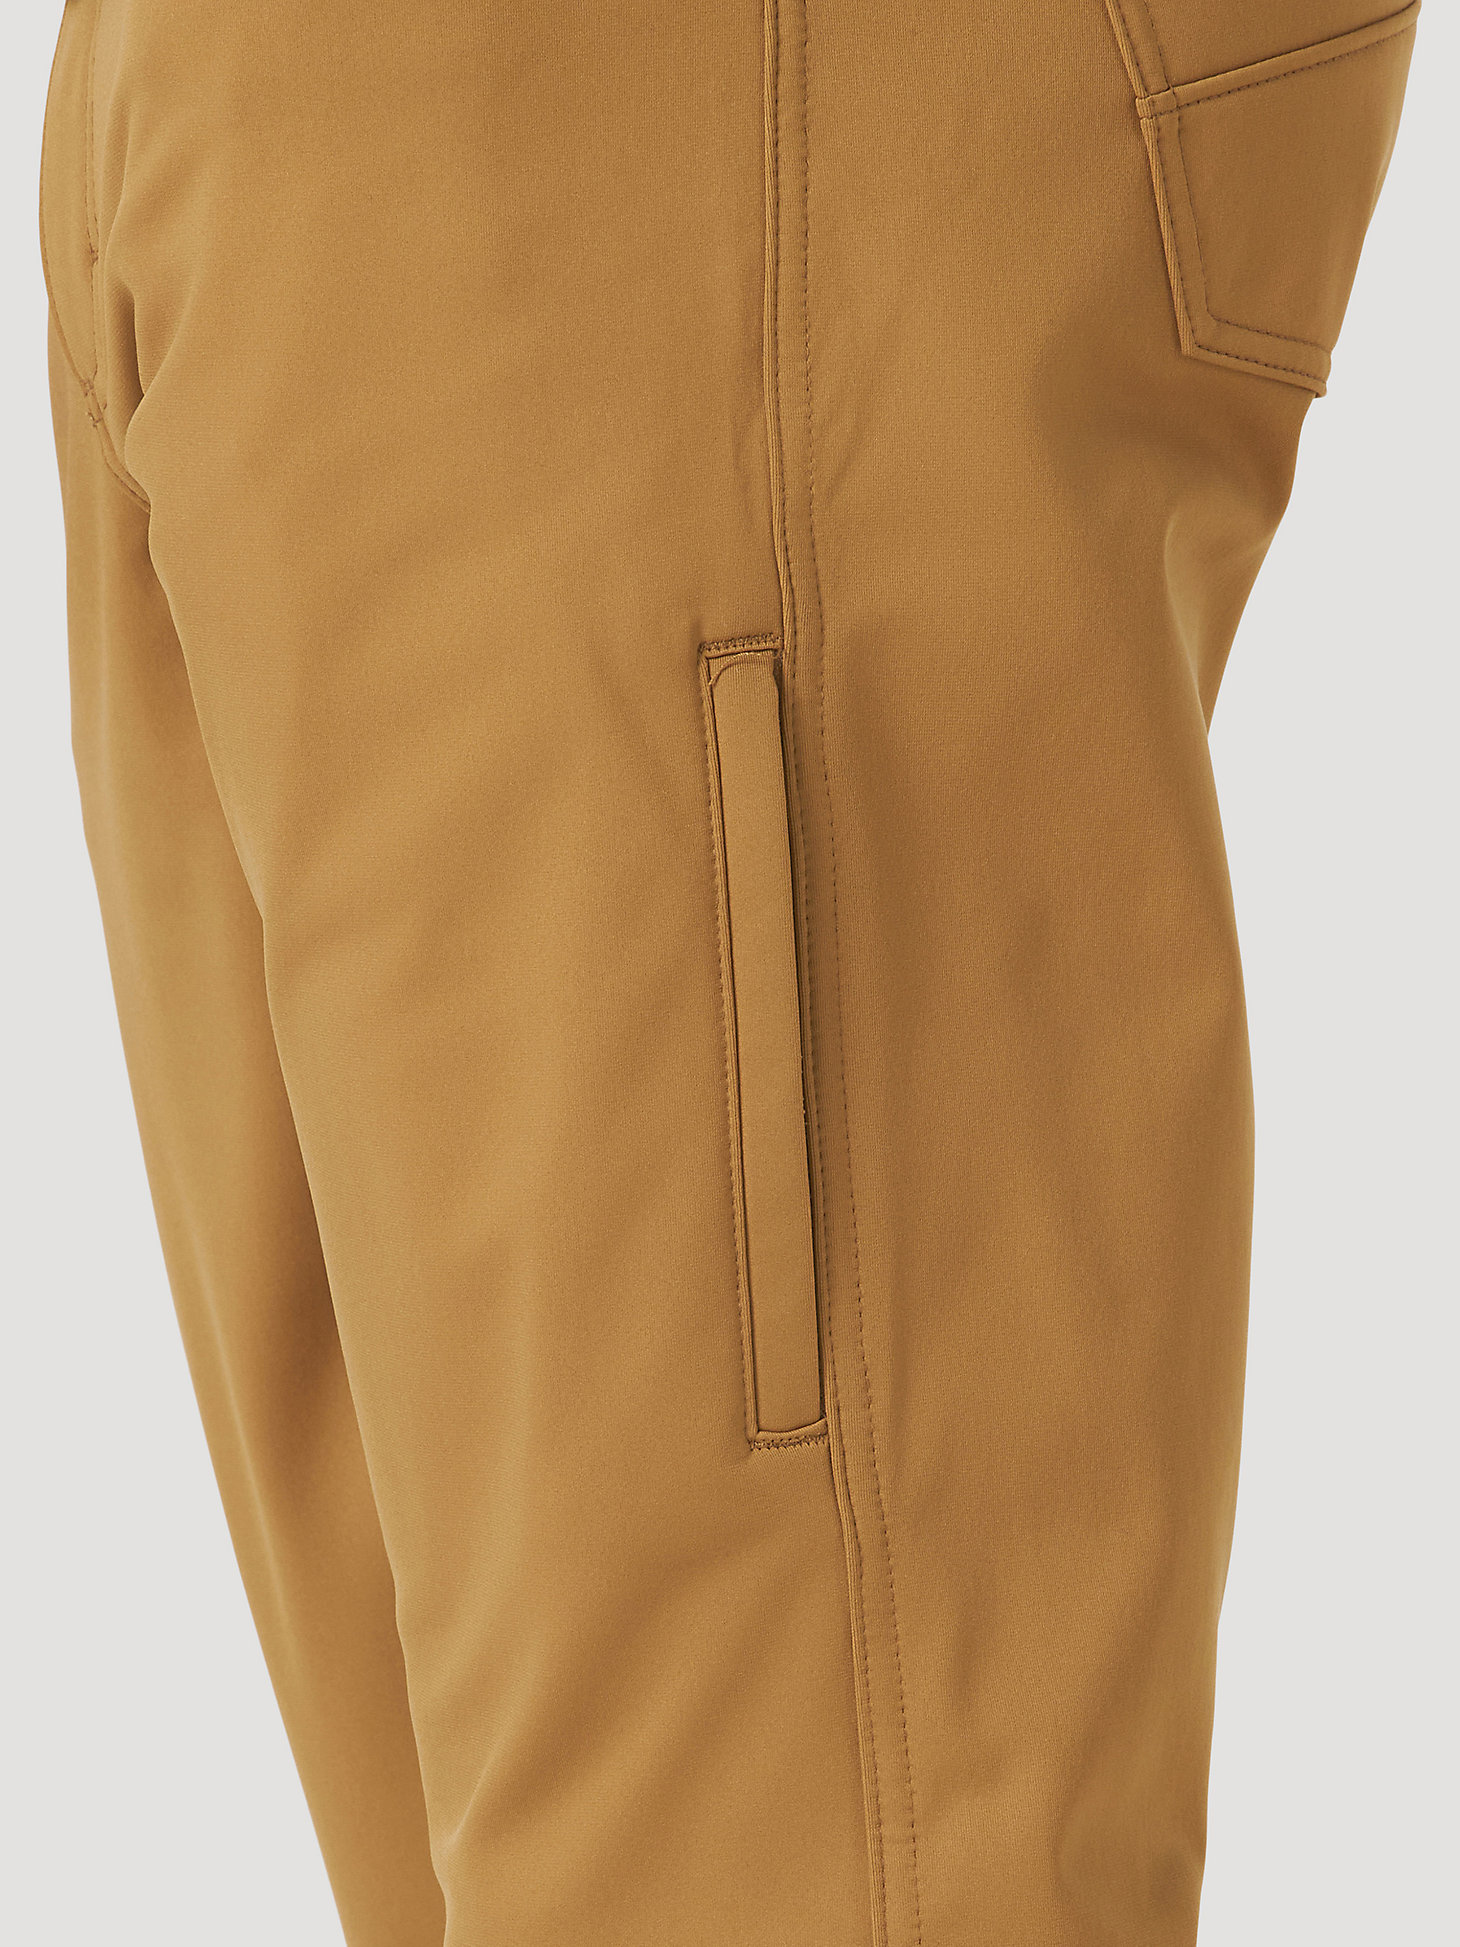 Men's Wrangler® Outdoor Single Layer Warming Pant in Ermine alternative view 4